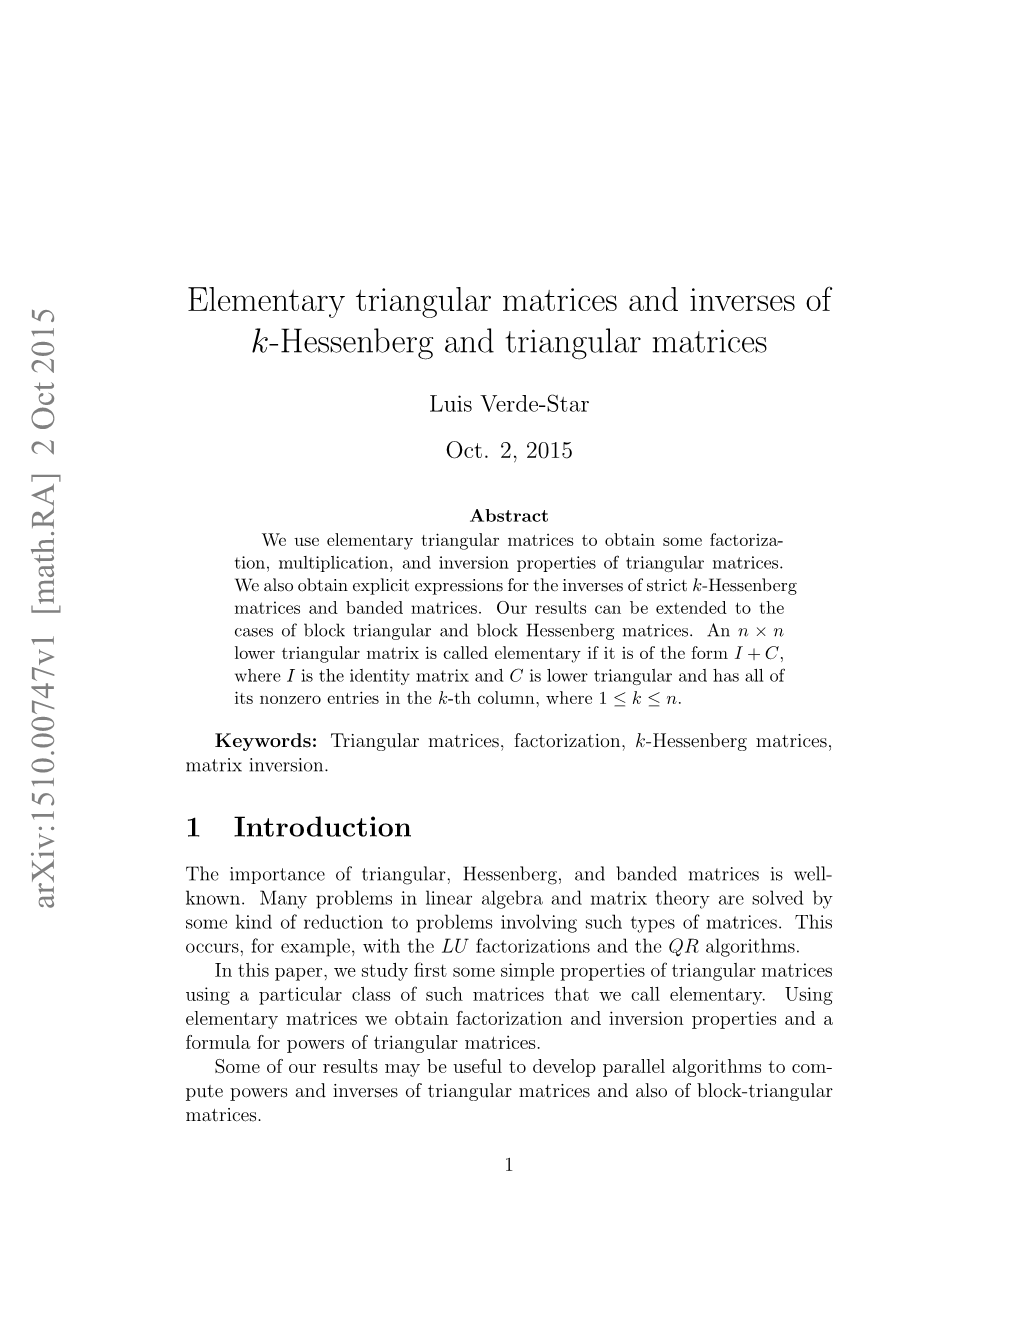 Elementary Triangular Matrices and Inverses of K-Hessenberg